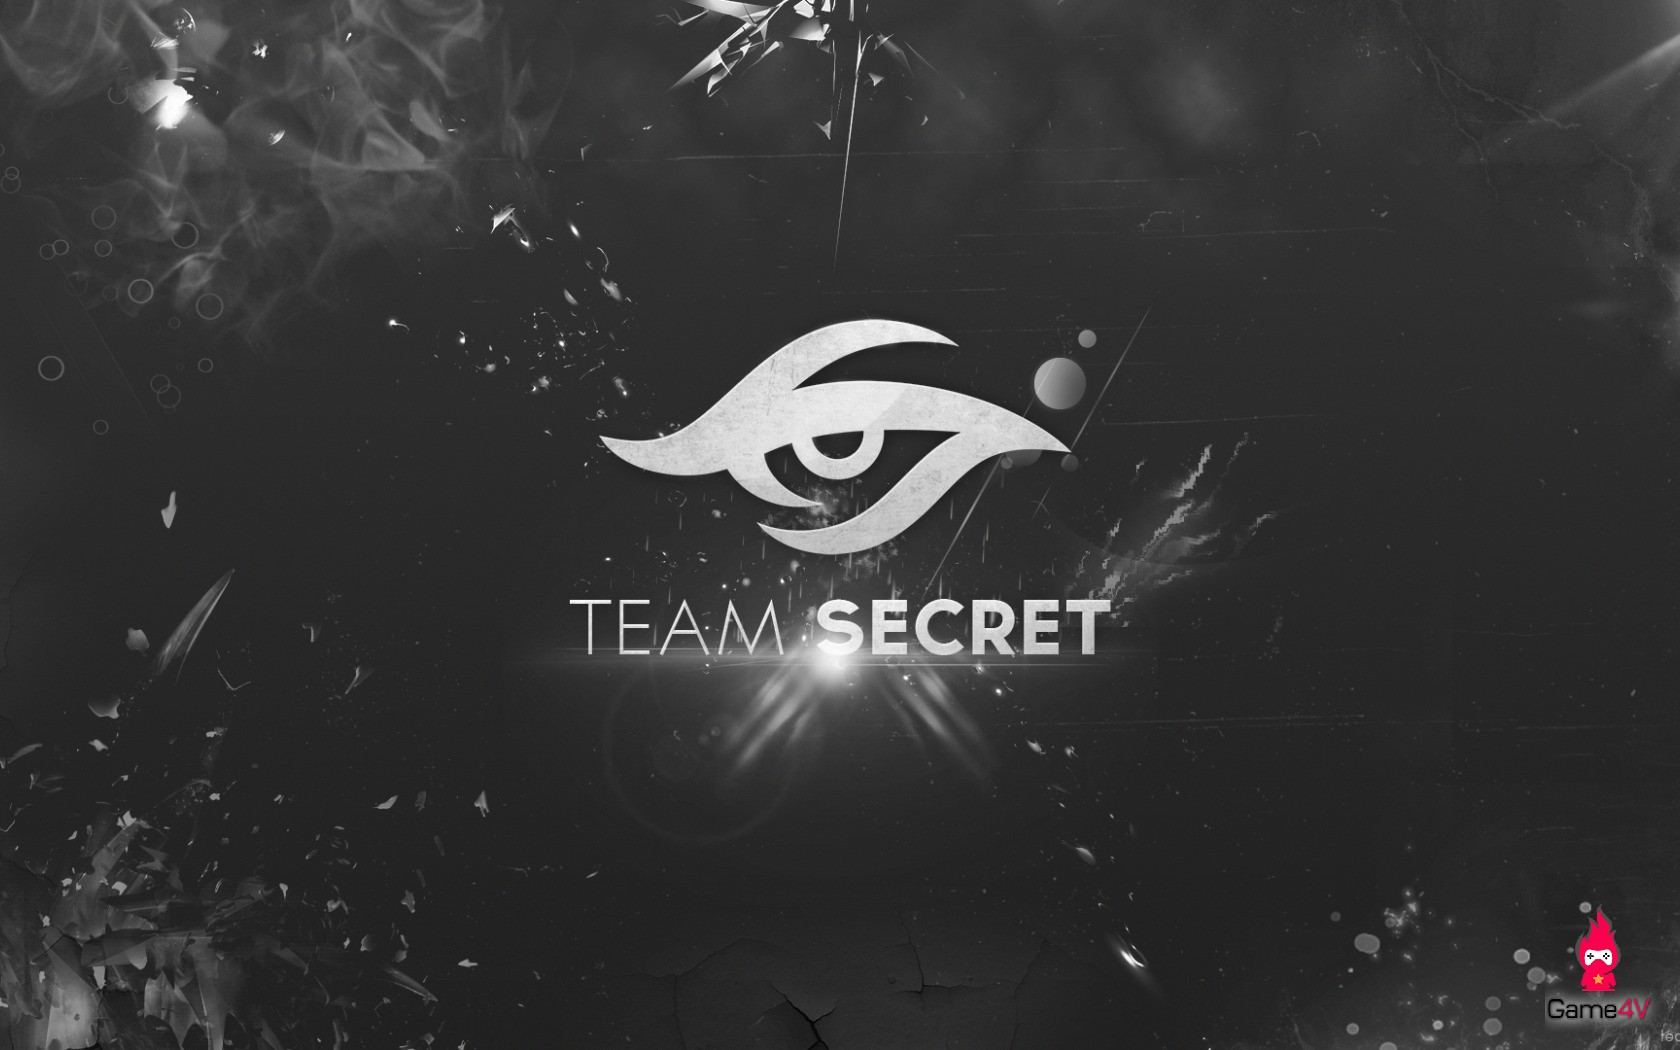 Steam secret. Команда Secret Dota 2. Логотип тим секрет. Team Secret 2022. Команда дота 2 тим Сикрет.